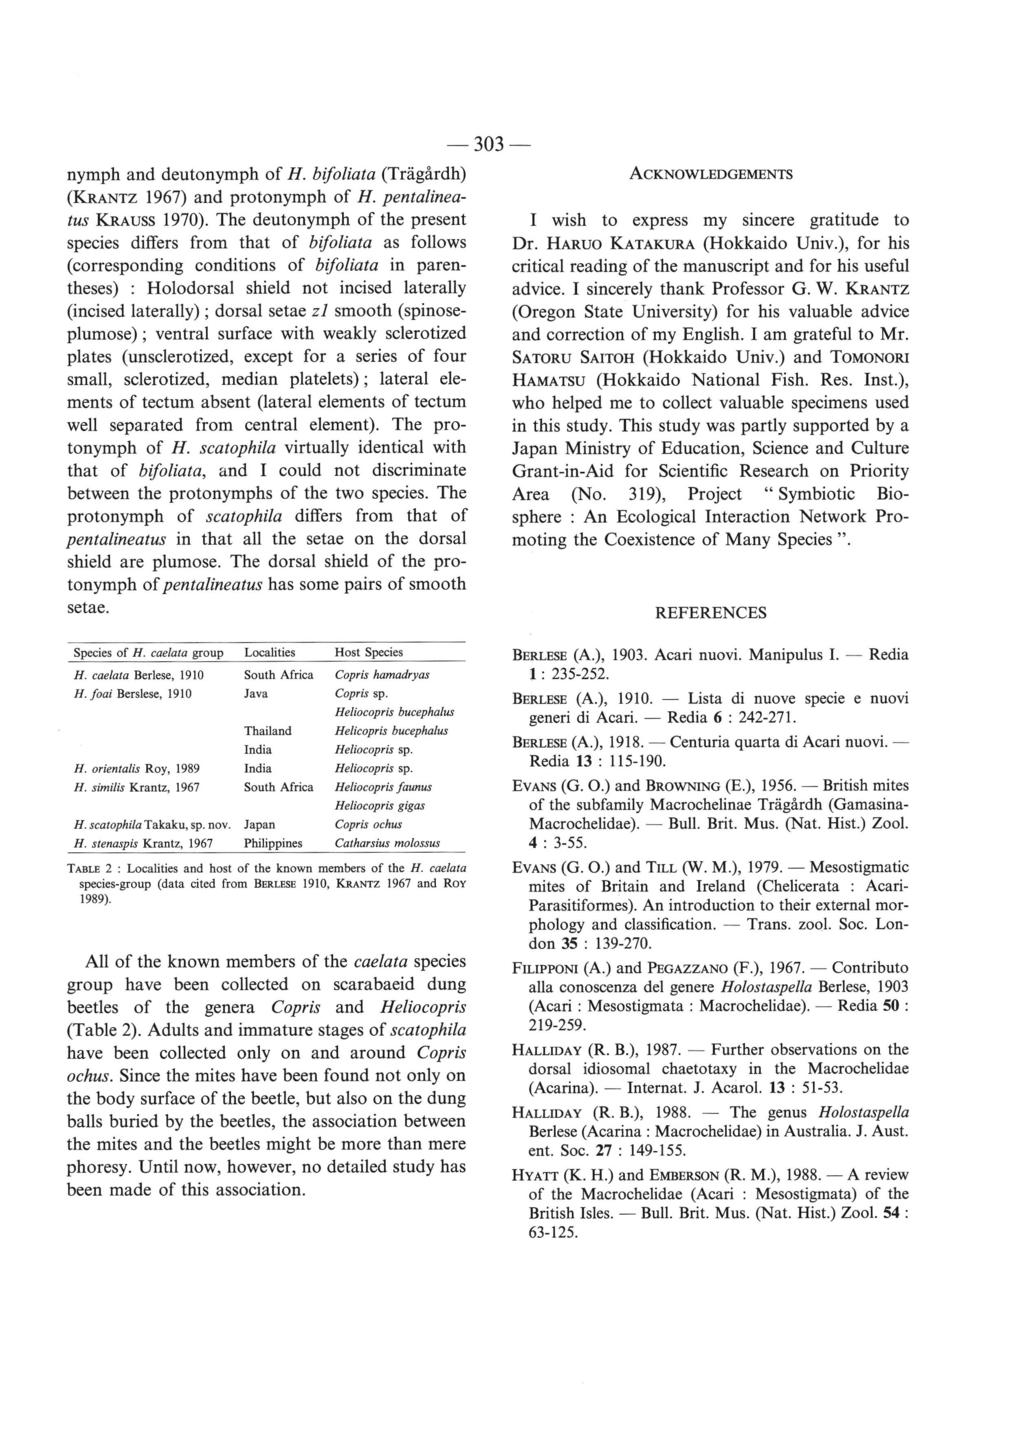 nymph and deutonymph of H. bifoliata (Tragardh) (KRANTZ 1967) and pro to nymph of H. pentalineatus KRAUSS 1970).